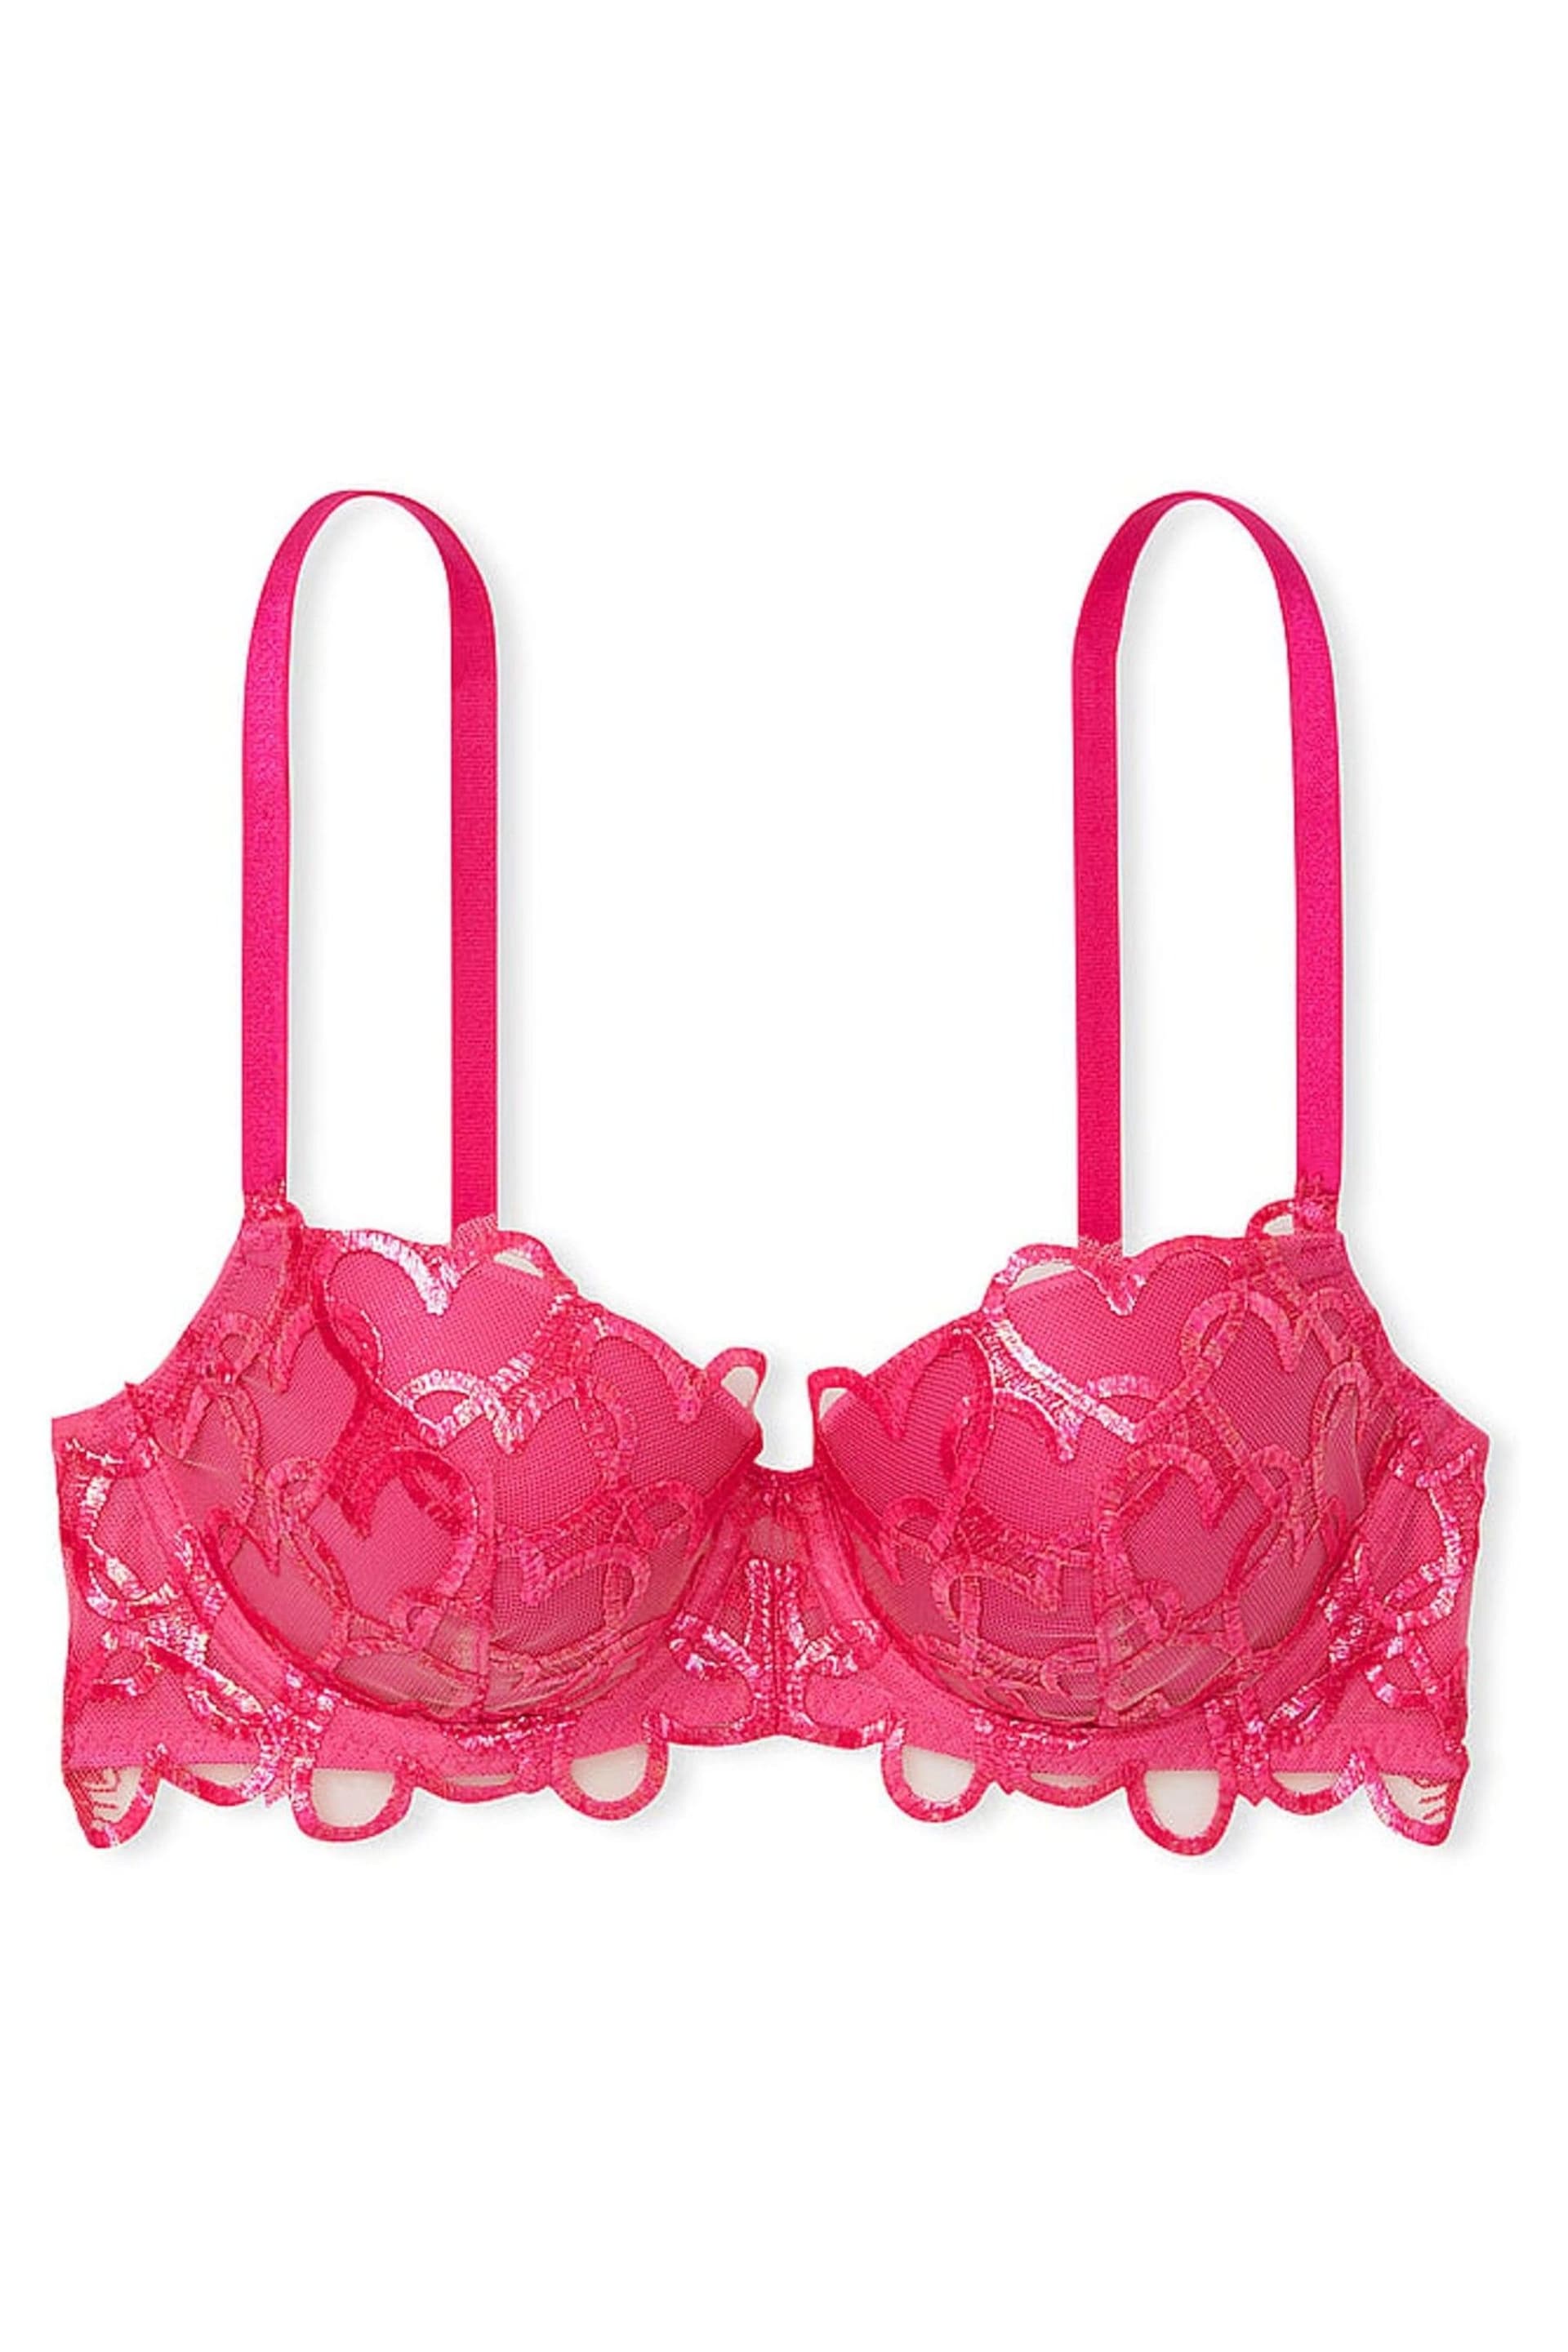 Victoria's Secret Forever Pink Hearts Lightly Lined Demi Bra - Image 3 of 3